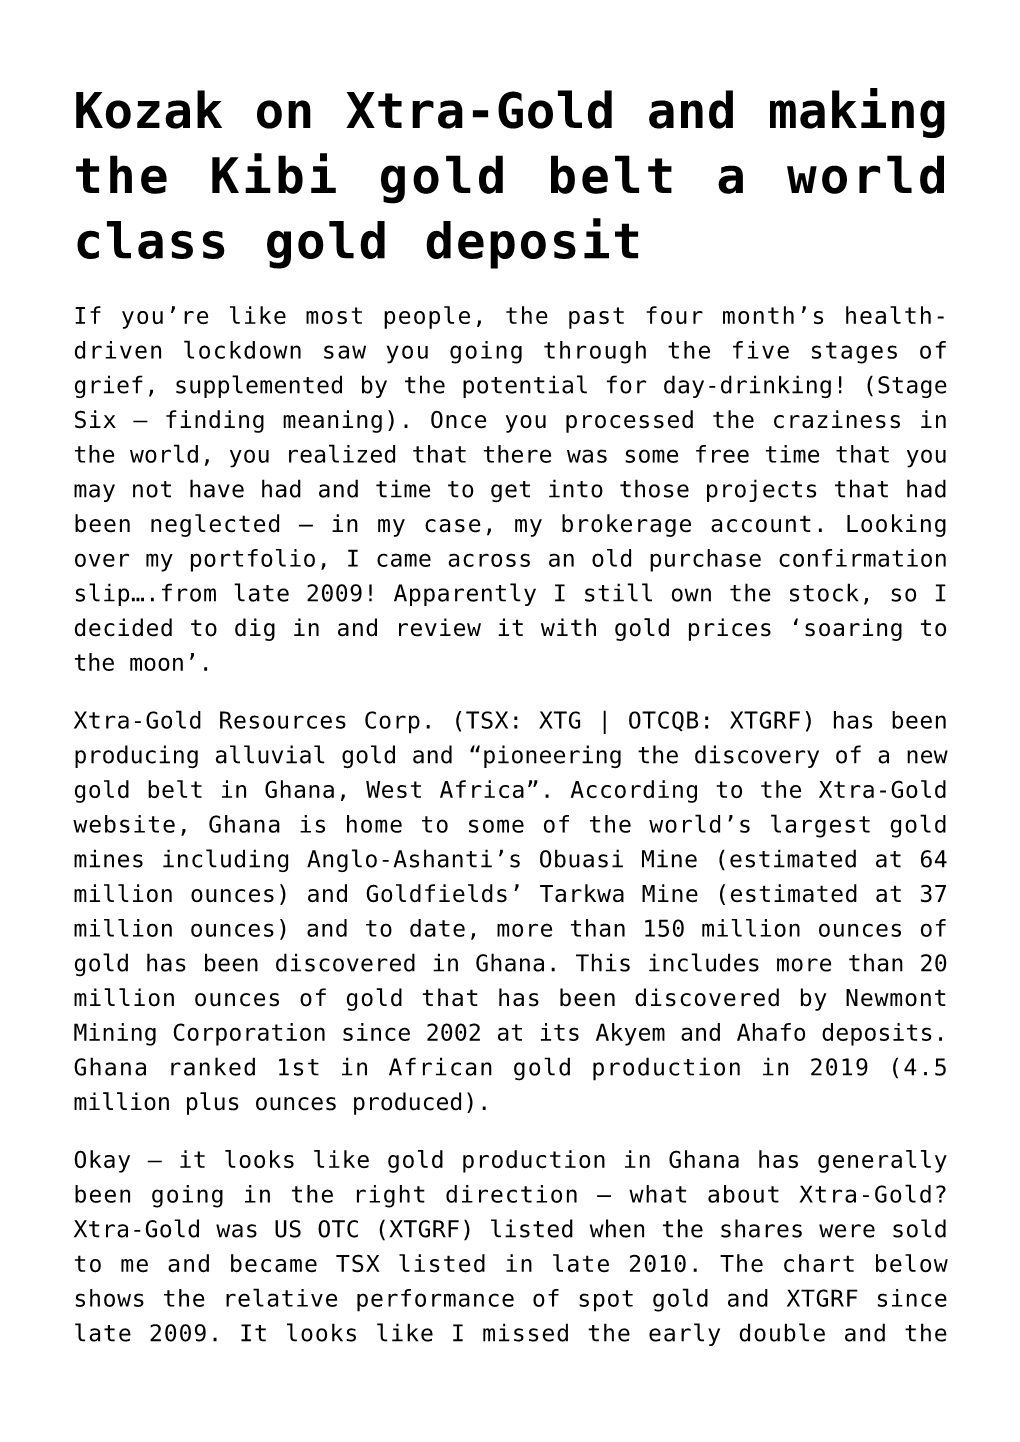 Kozak on Xtra-Gold and Making the Kibi Gold Belt a World Class Gold Deposit